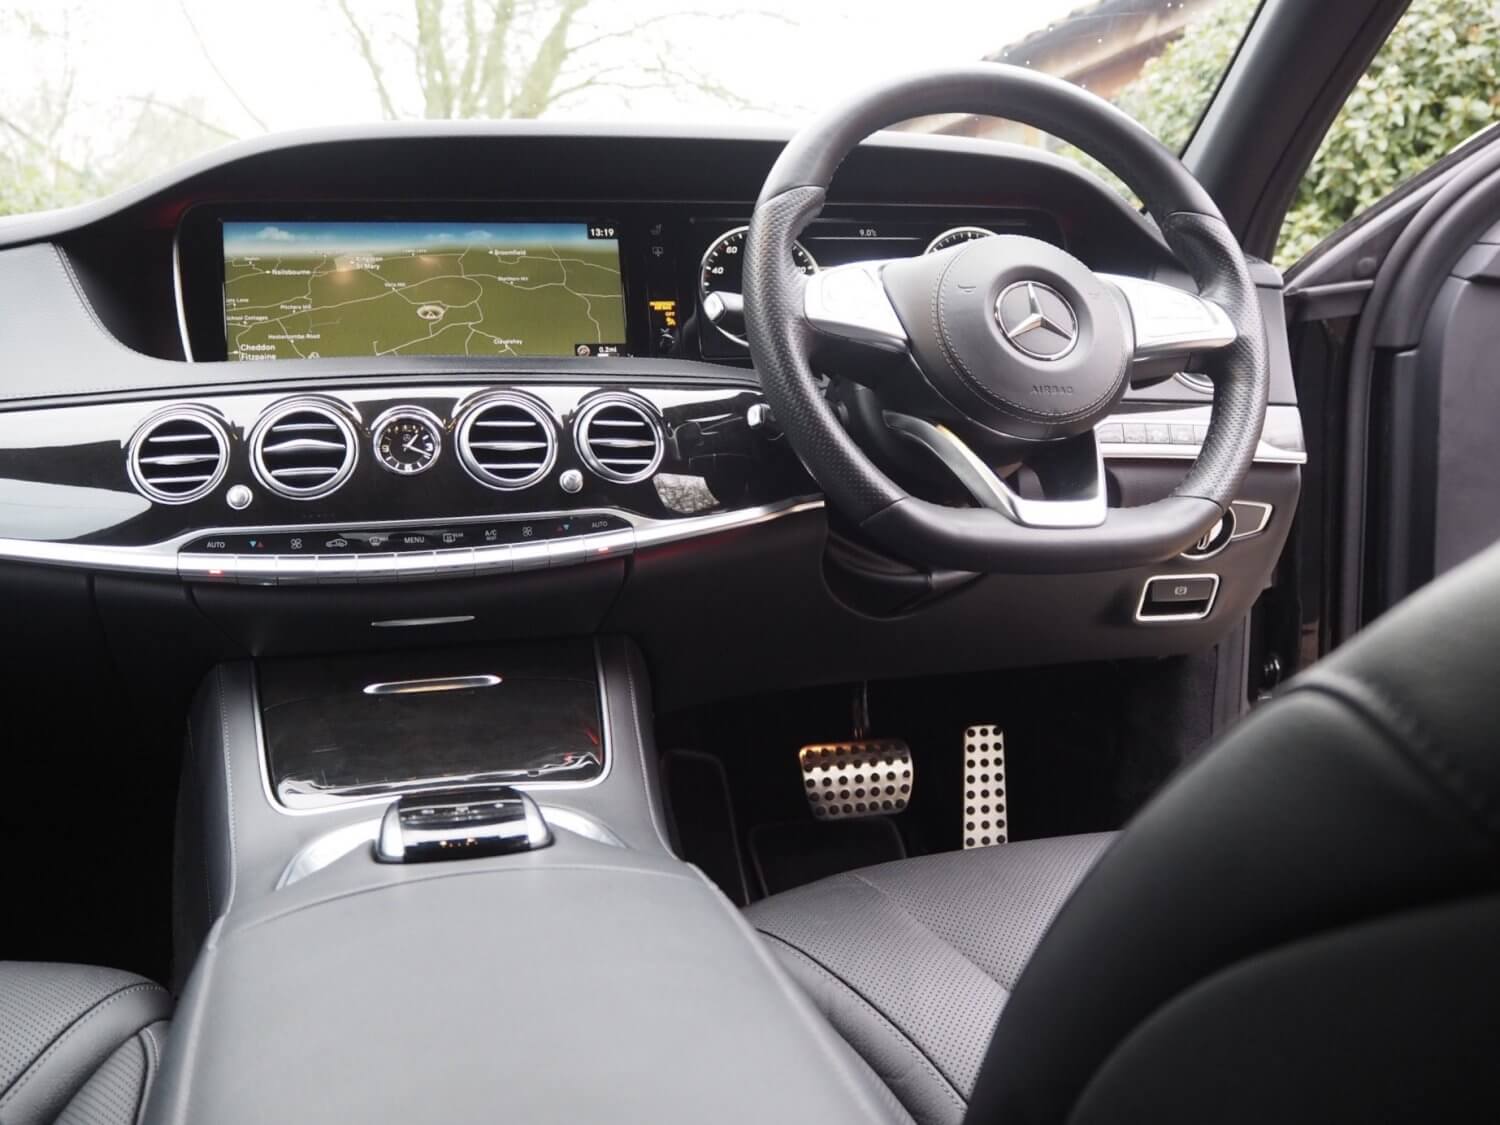 Somerset Exec Travel - Mercedes Benz S-Class Cockpit